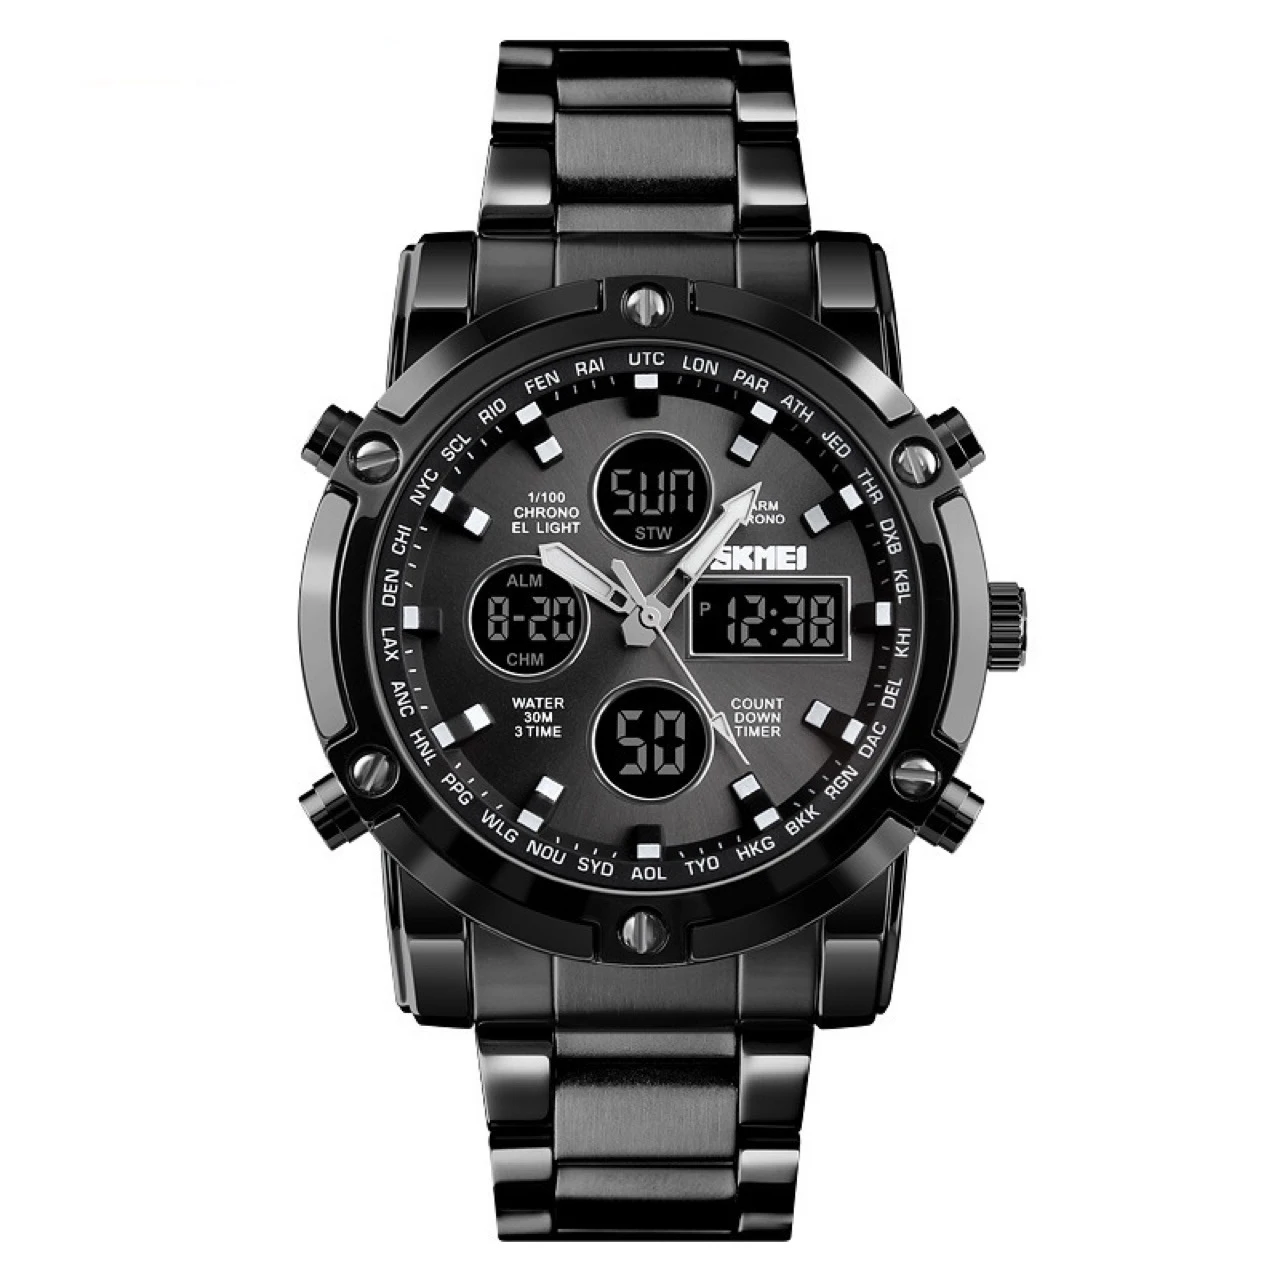 

Digital watch Original brand SKMEI 1389 Waterproof Men Sport watches Hight Quality Stainless steel relojes hombre